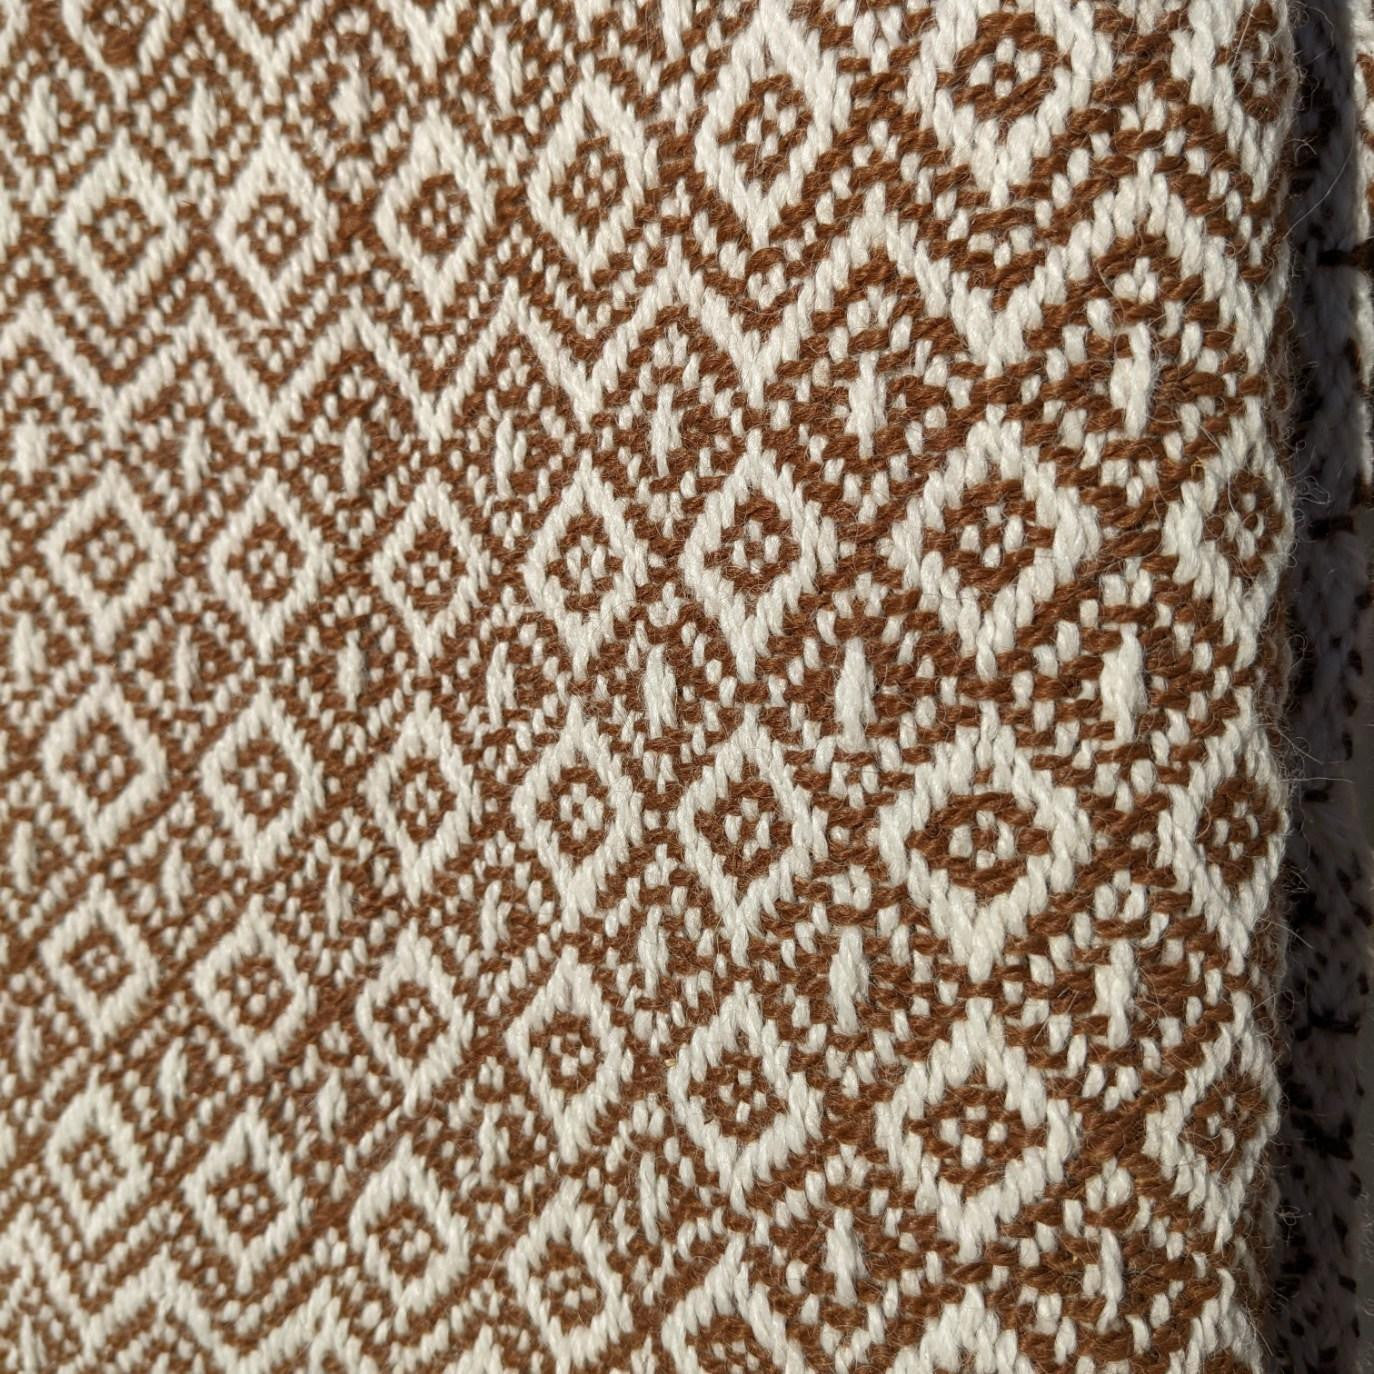 EEF Blankets patterned neutral